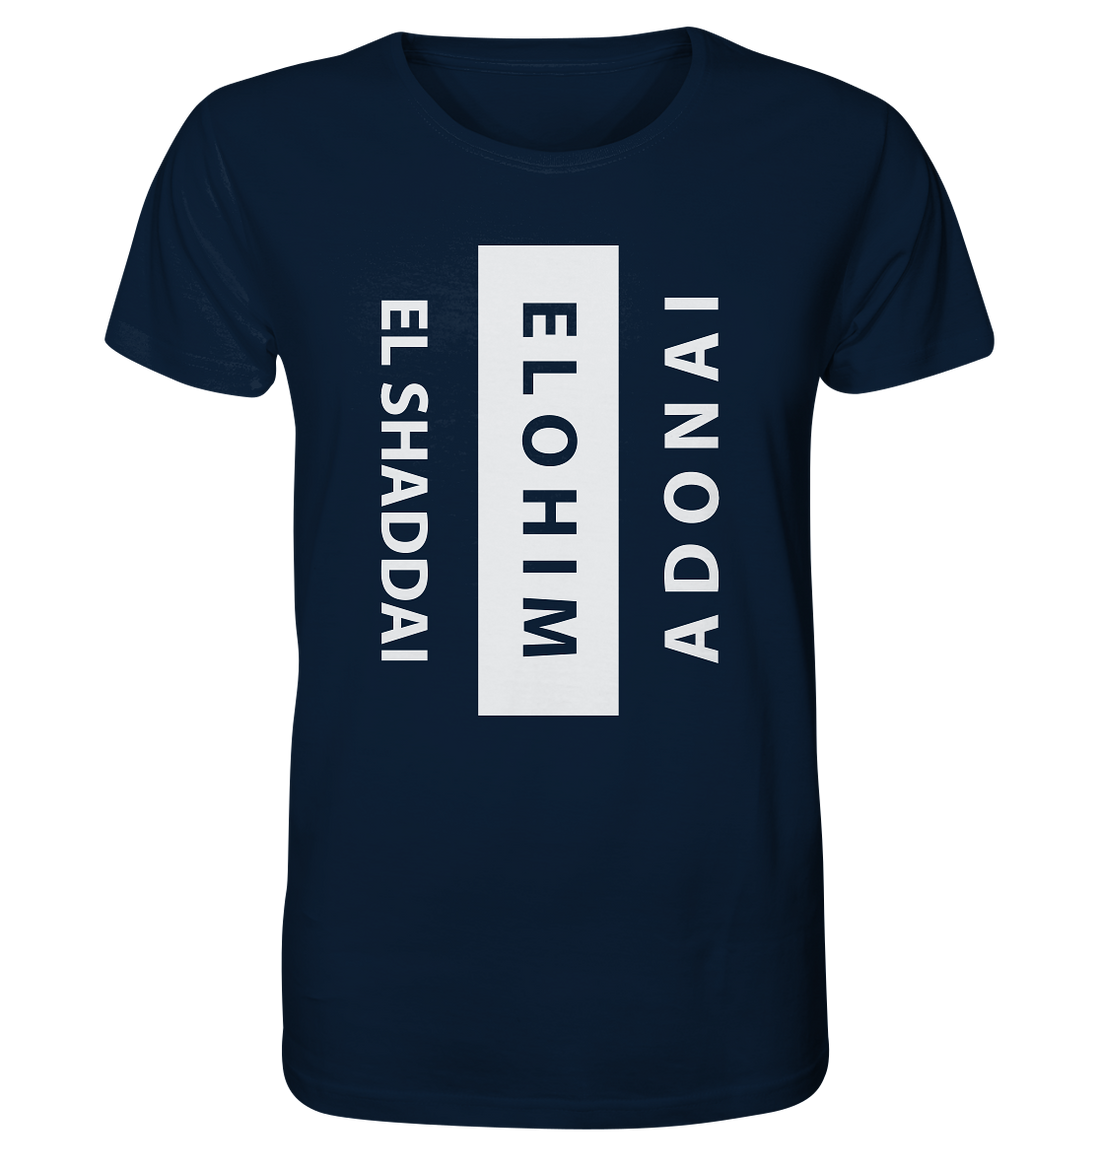 El Shaddai, Elohim, Adonai - Organic Shirt